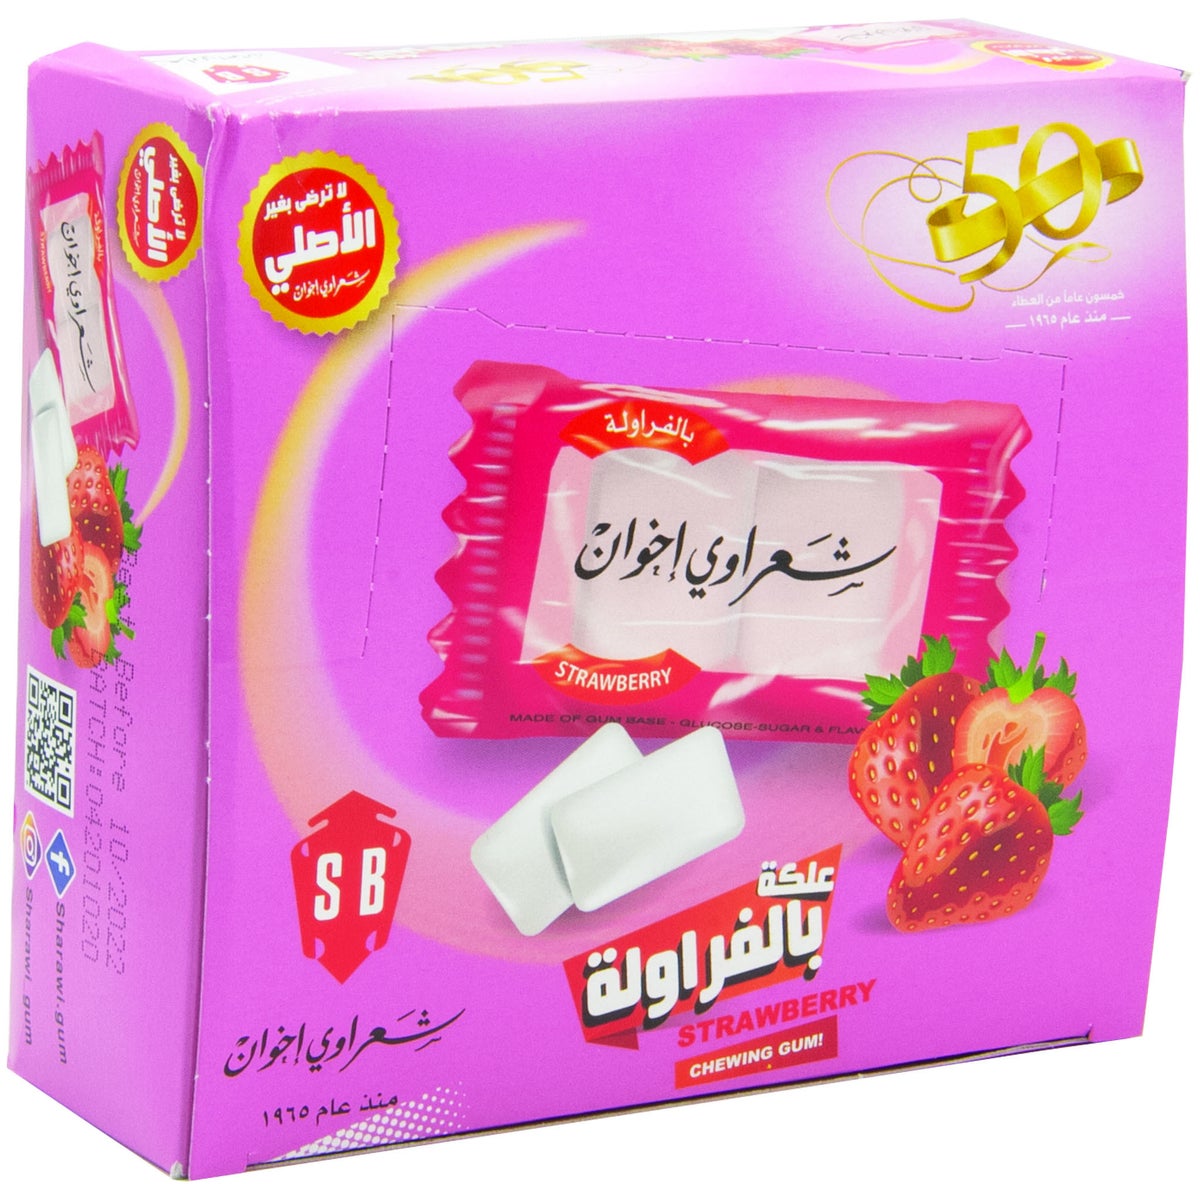 Sharawi Strawberry Chewing Gum 100 Ct. x 24 (290g)